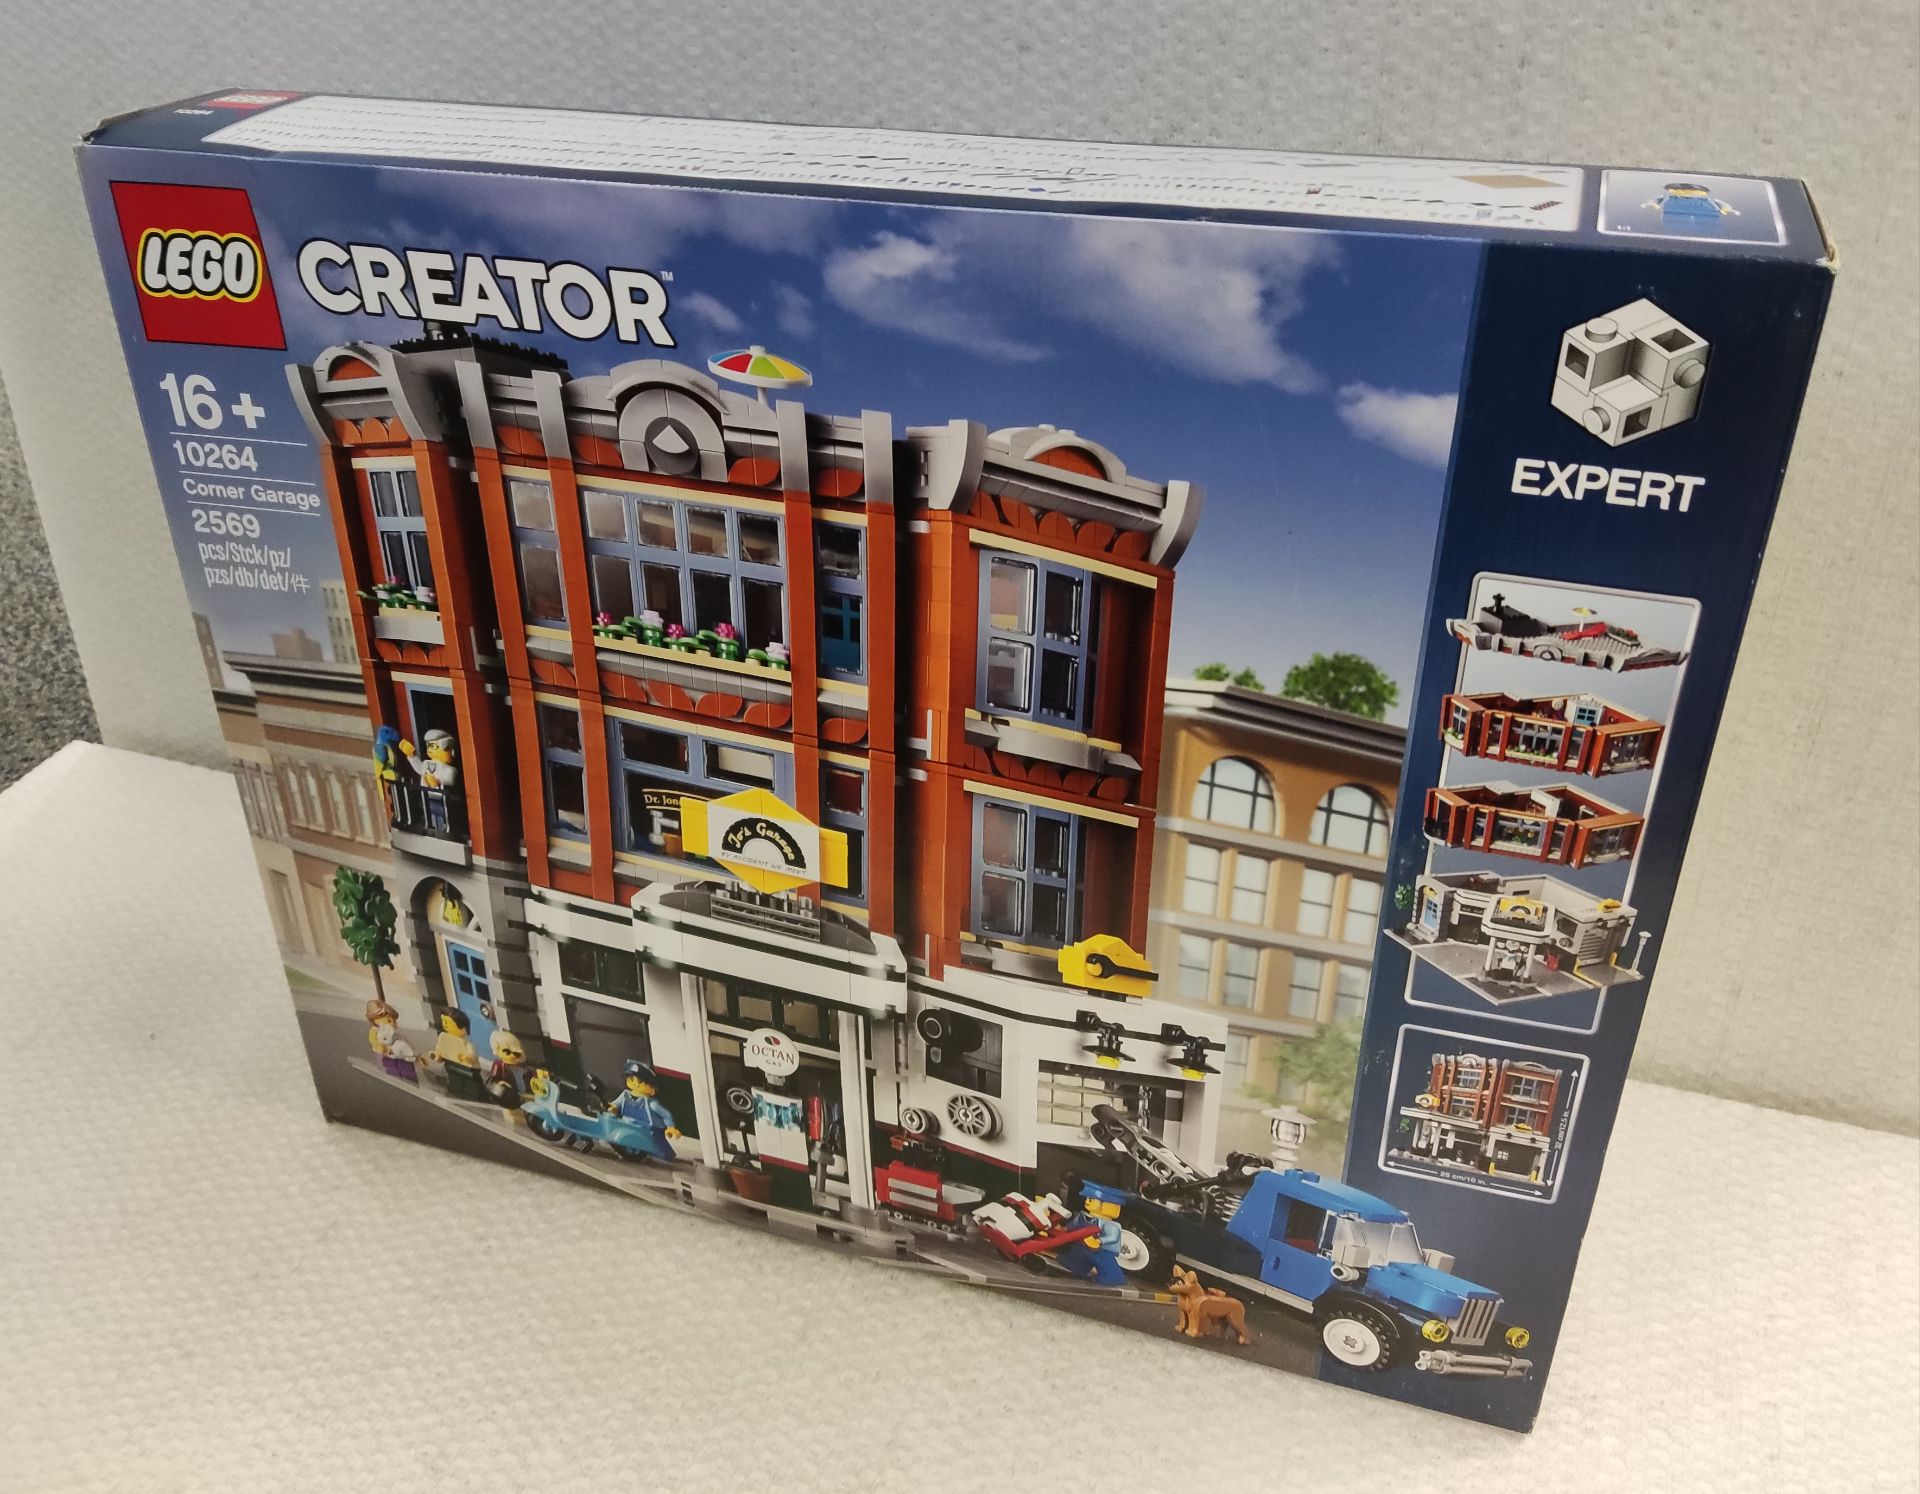 1 x Lego Creator Expert Corner Garage - Model 10264 - New/Boxed - Image 3 of 10